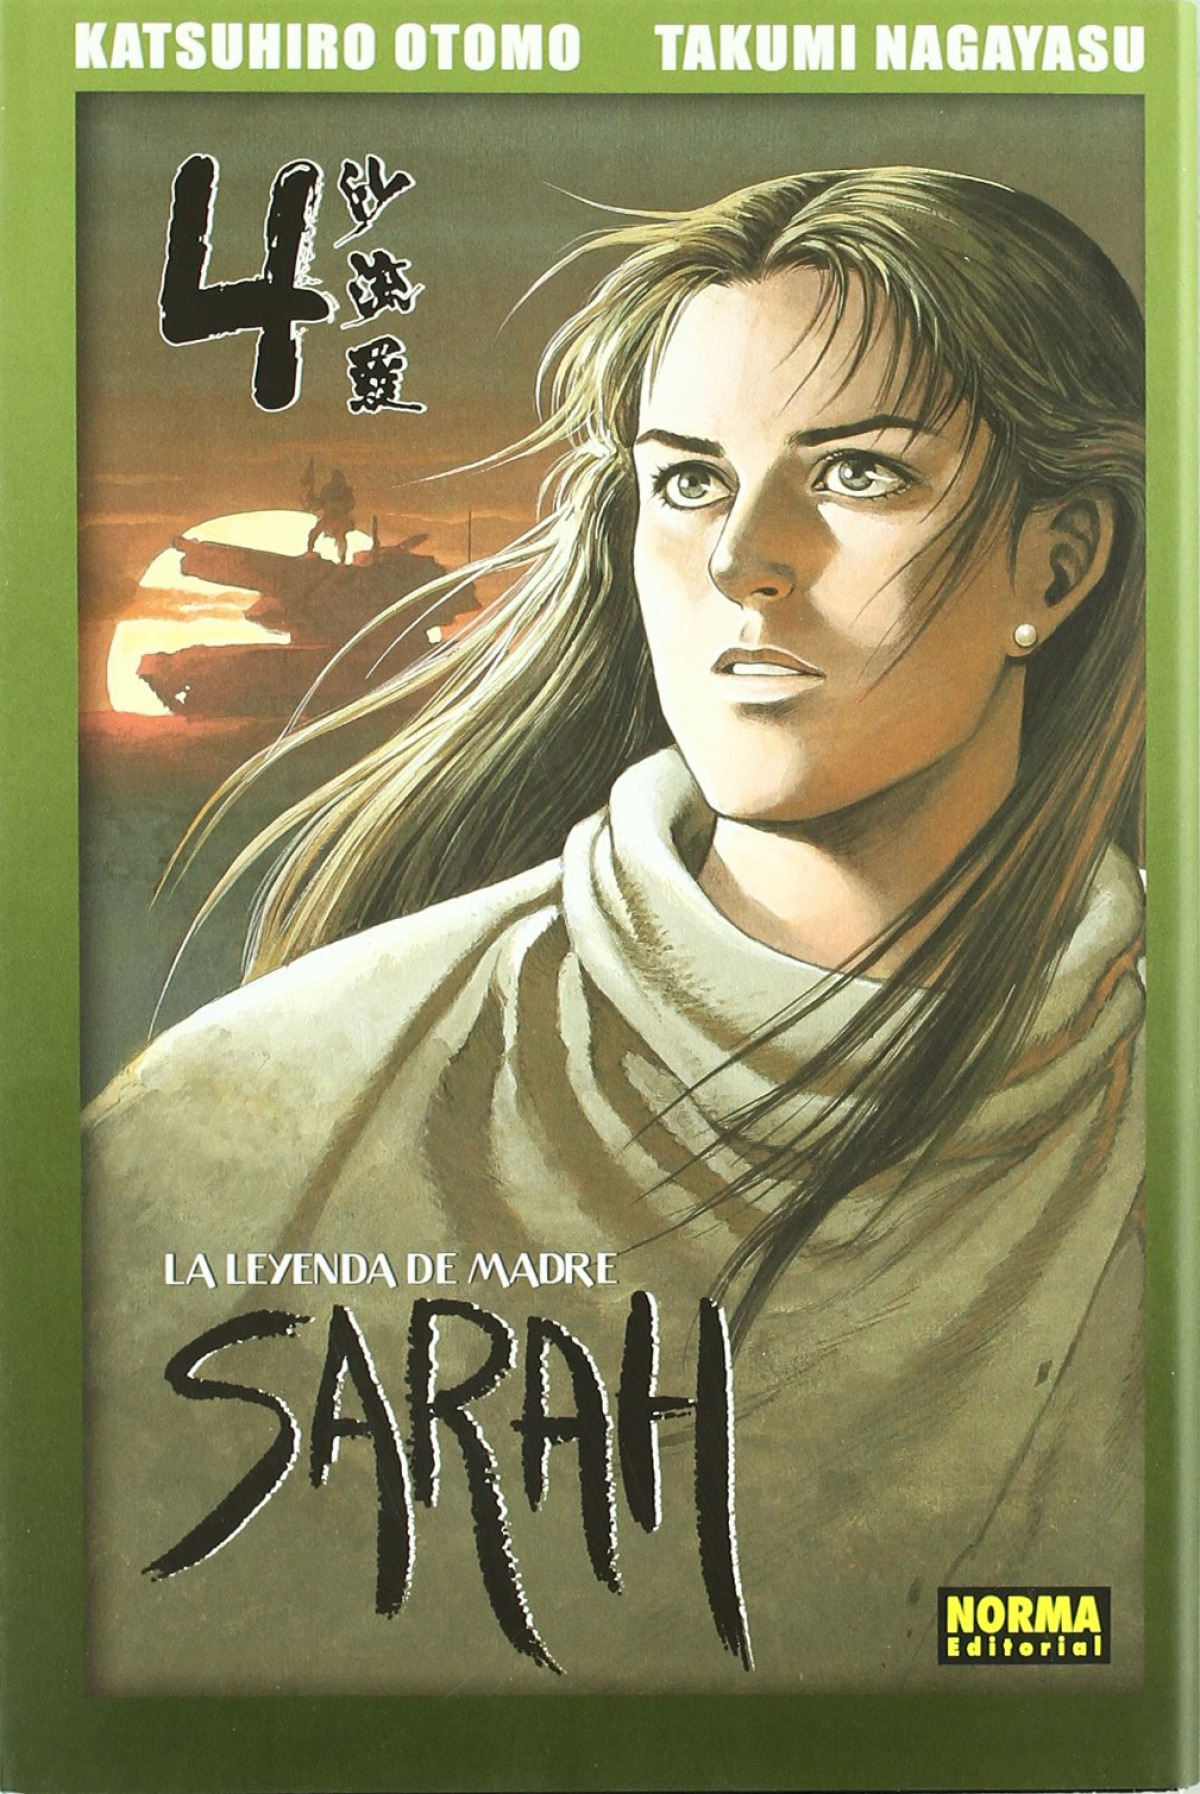 La leyenda de madre sarah 4 ed. coleccionista - Otomo, Katsuhiro/Nagayasu, Takumi